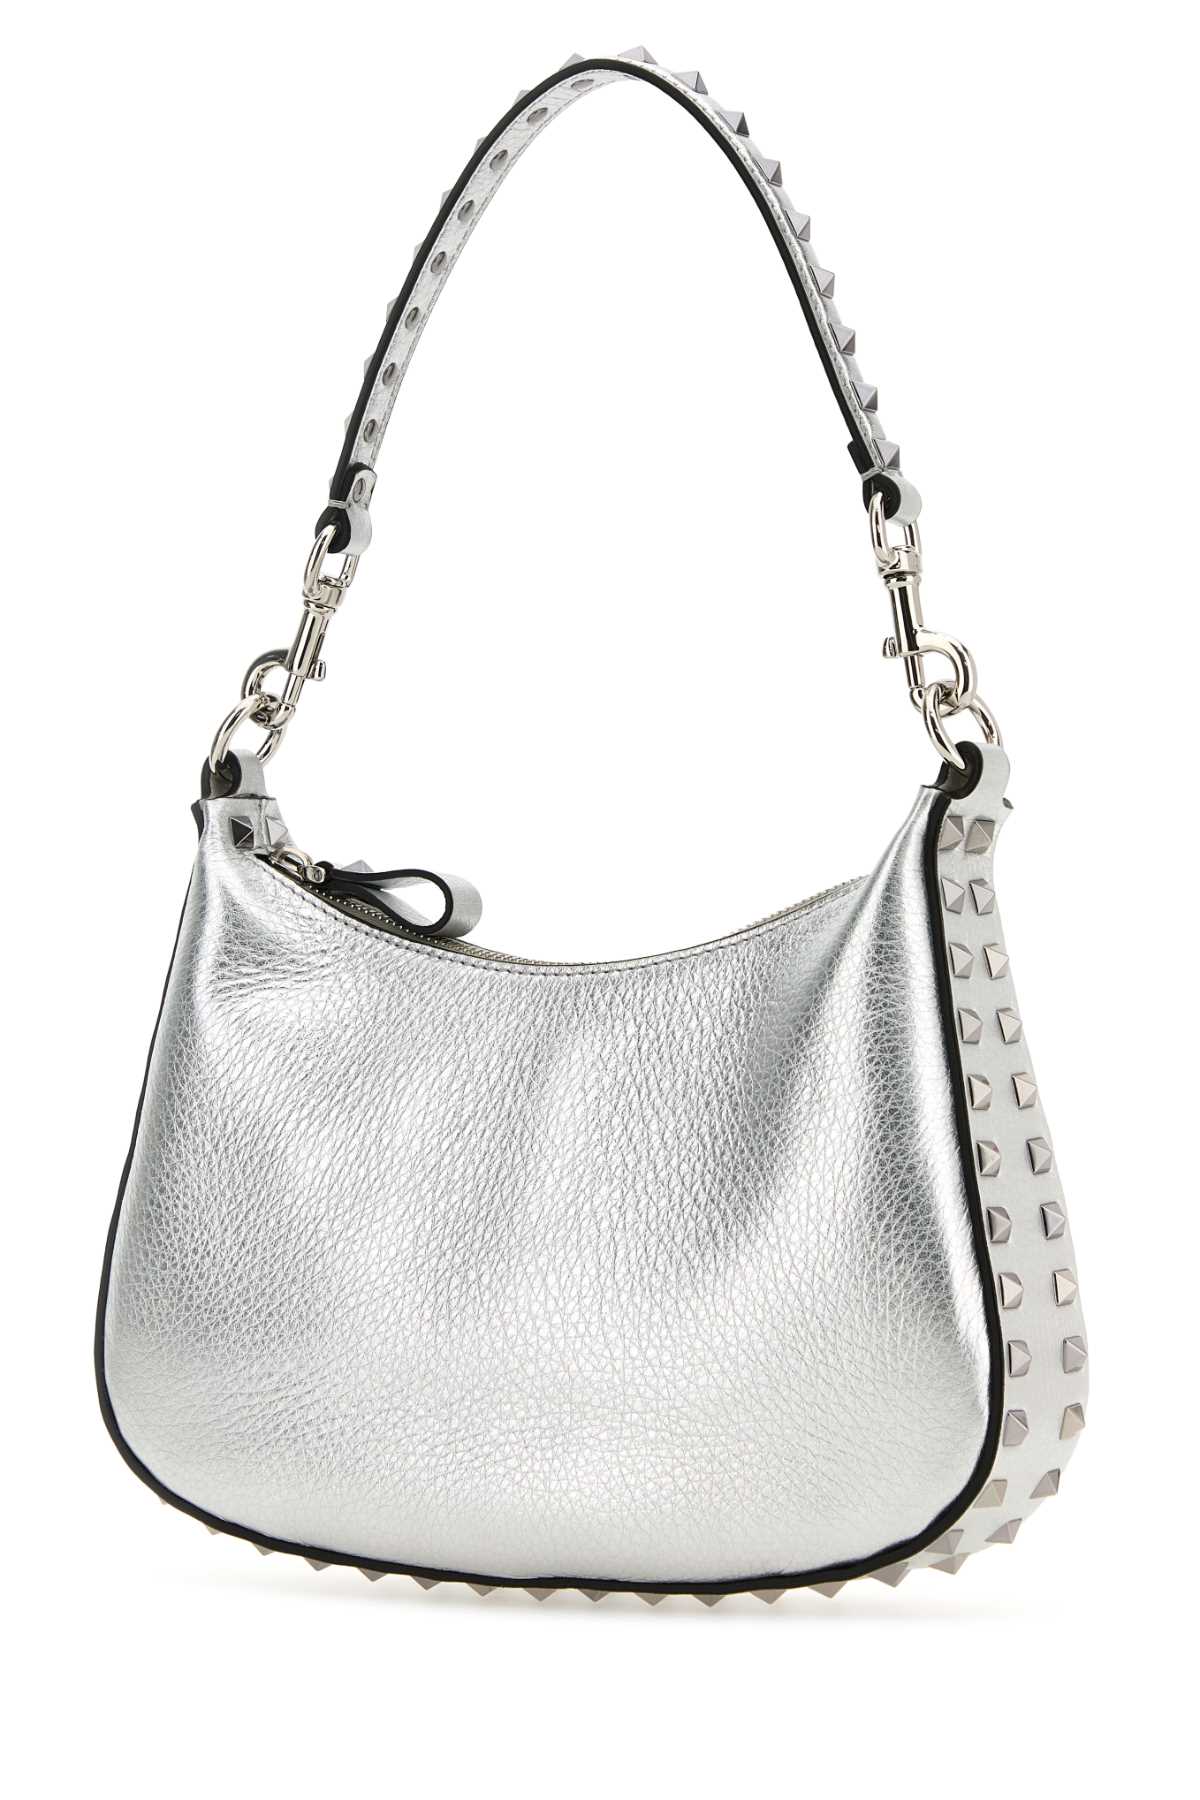 Valentino Garavani Silver Leather Rockstud Handbag